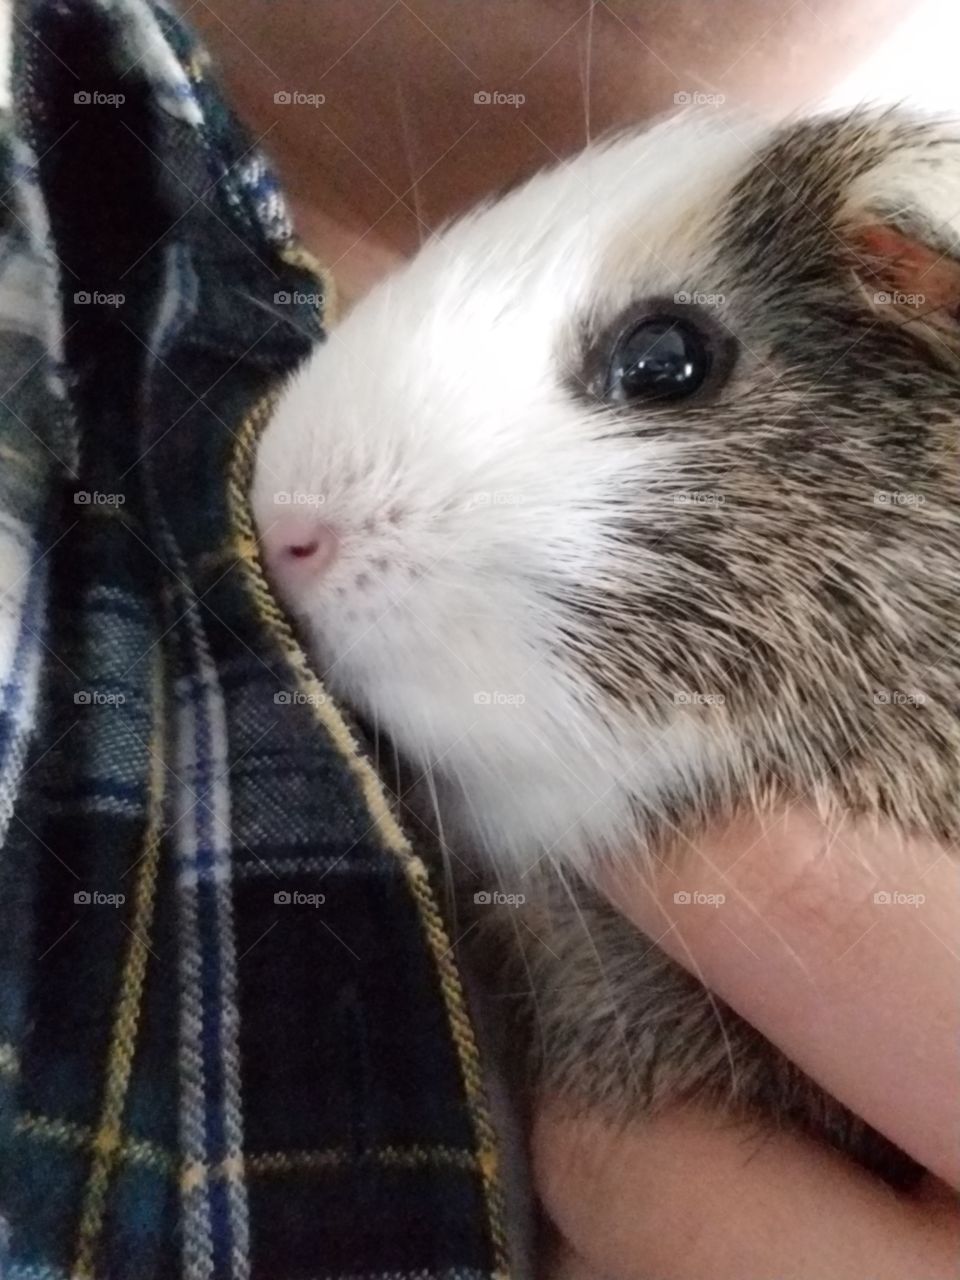 A guinea pig held close against a flannel shirt.